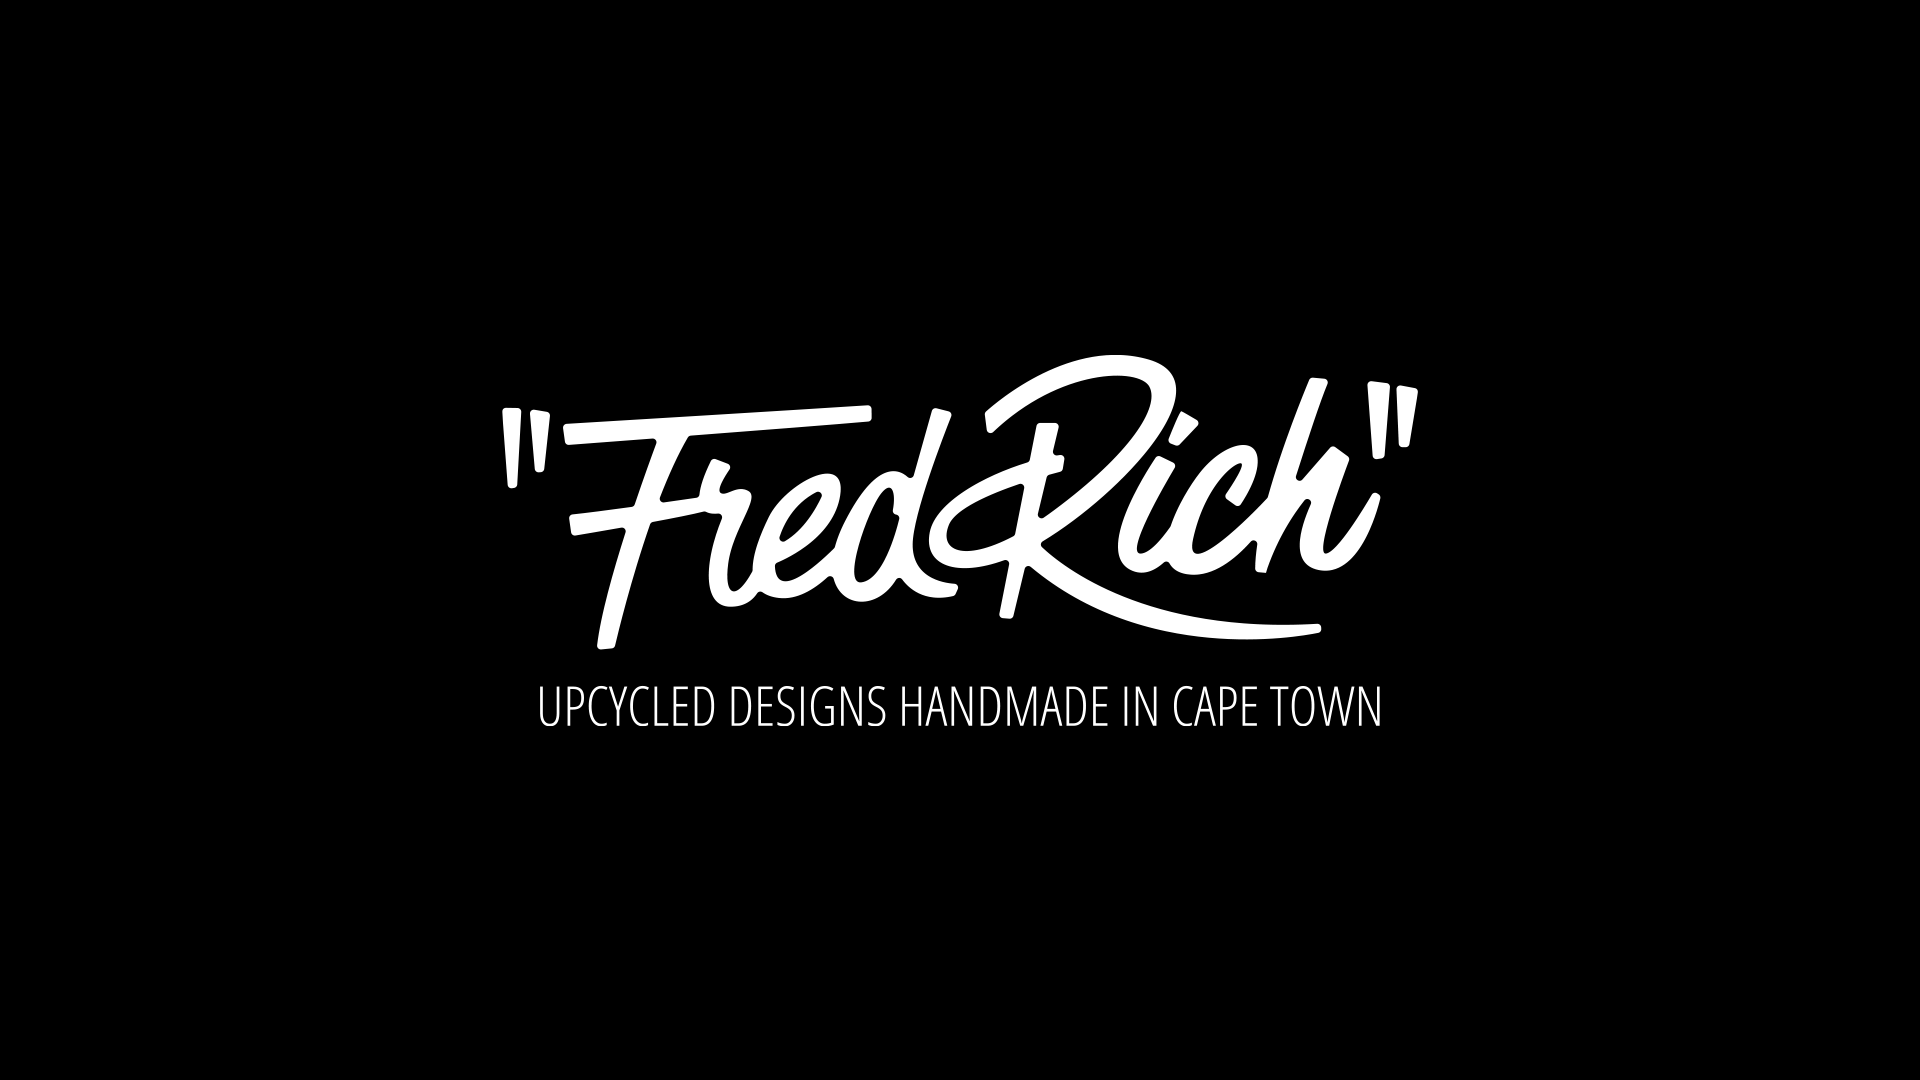 (c) Fred-rich.com